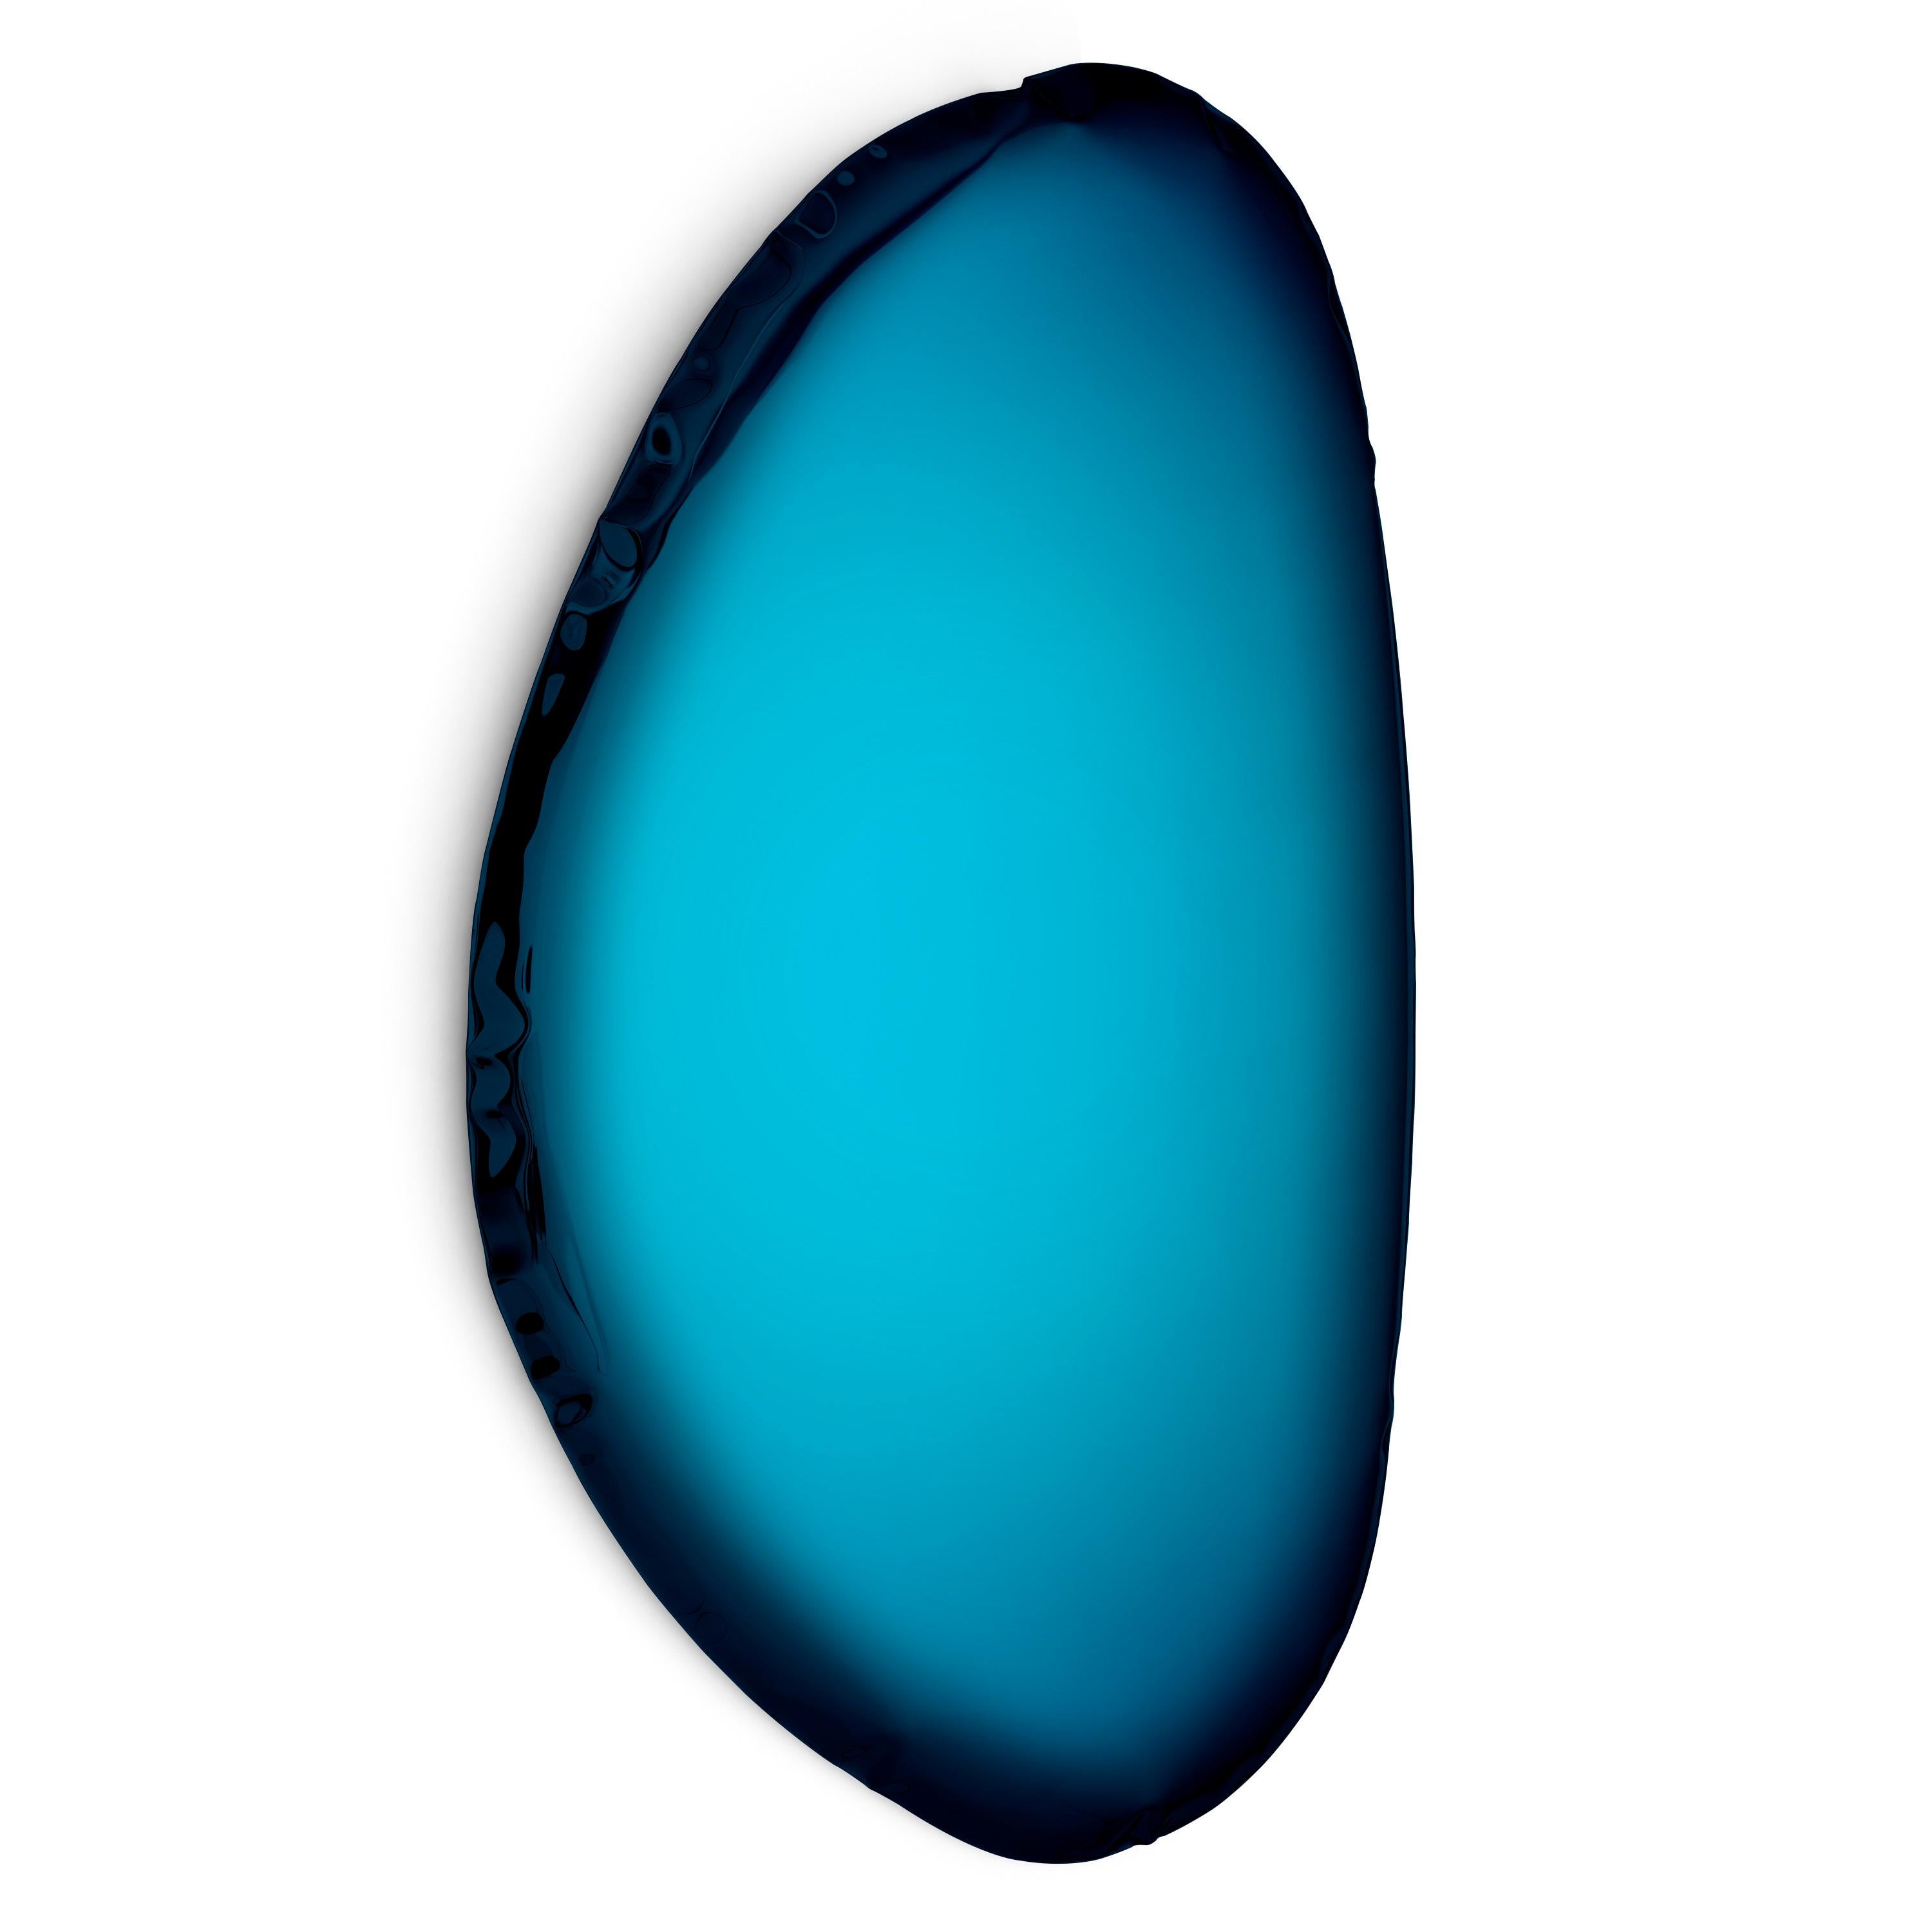 Deep space blue Tafla O3 wall mirror by Zieta
Dimensions: D 6 x W 79 x H 124 cm 
Material: Stainless steel.
Finish: Deep space blue. 
Available finishes: Stainless steel, white matt, sapphire/emerald, sapphire, emerald, deep space blue, Dark matter,